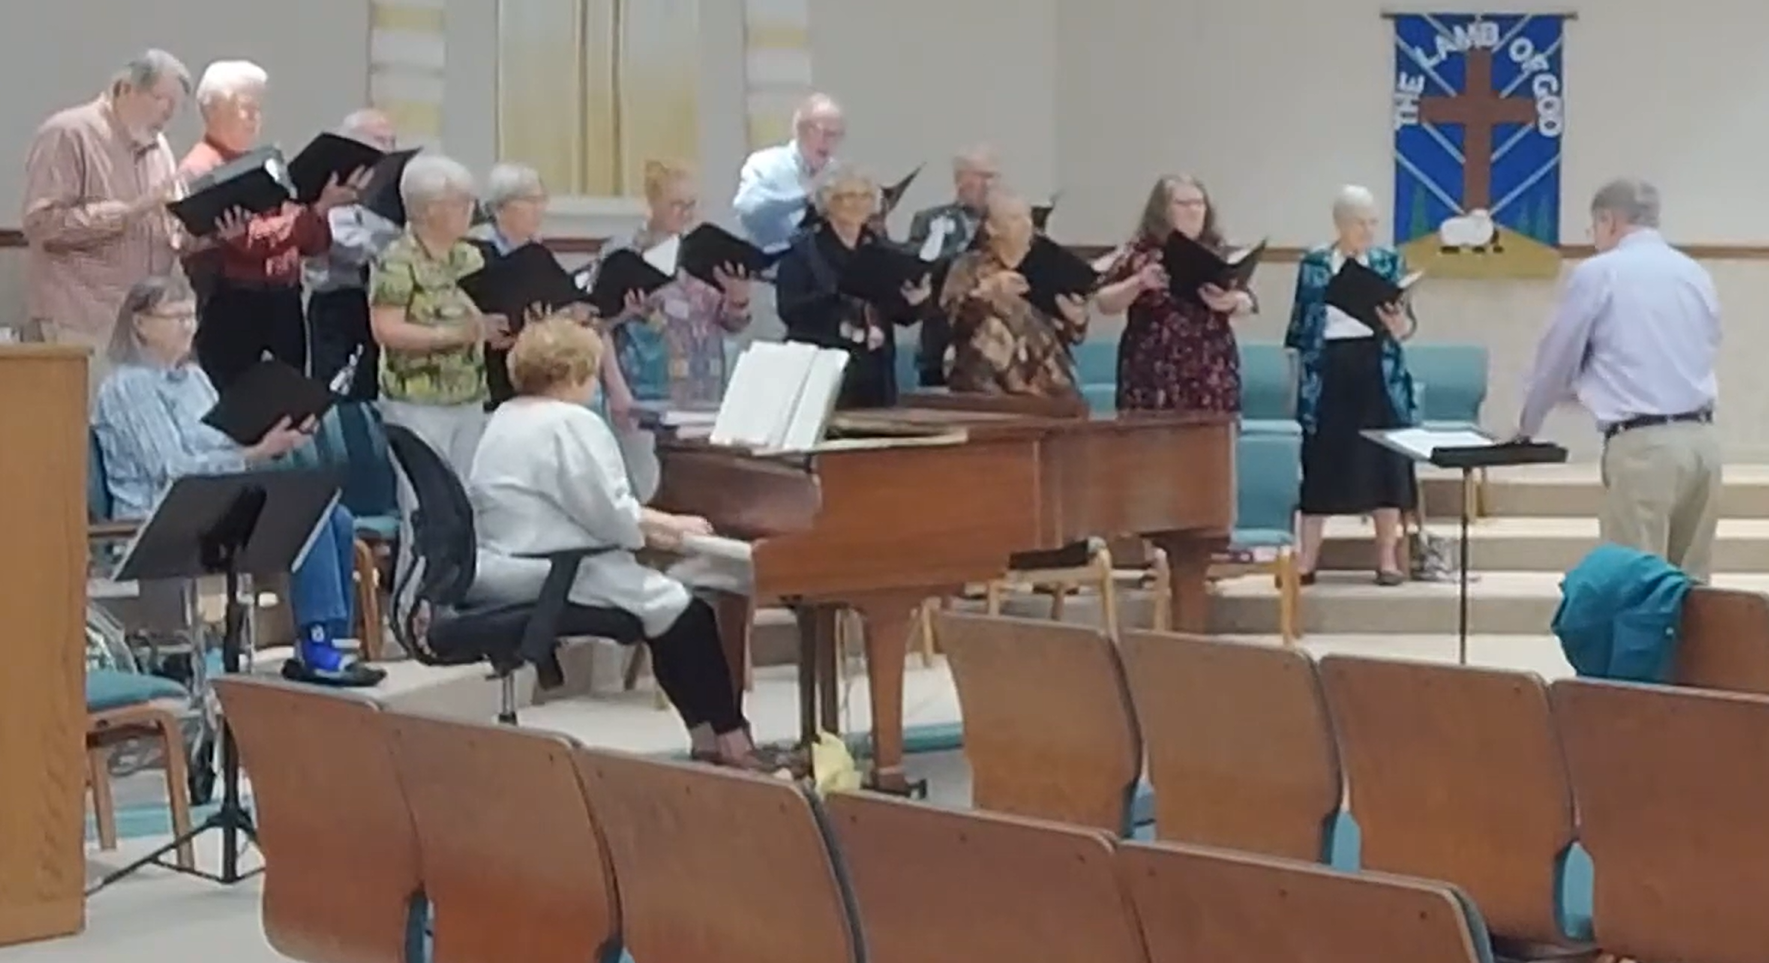 Balmoral Presbyterian Church's Choir provides a musical offering